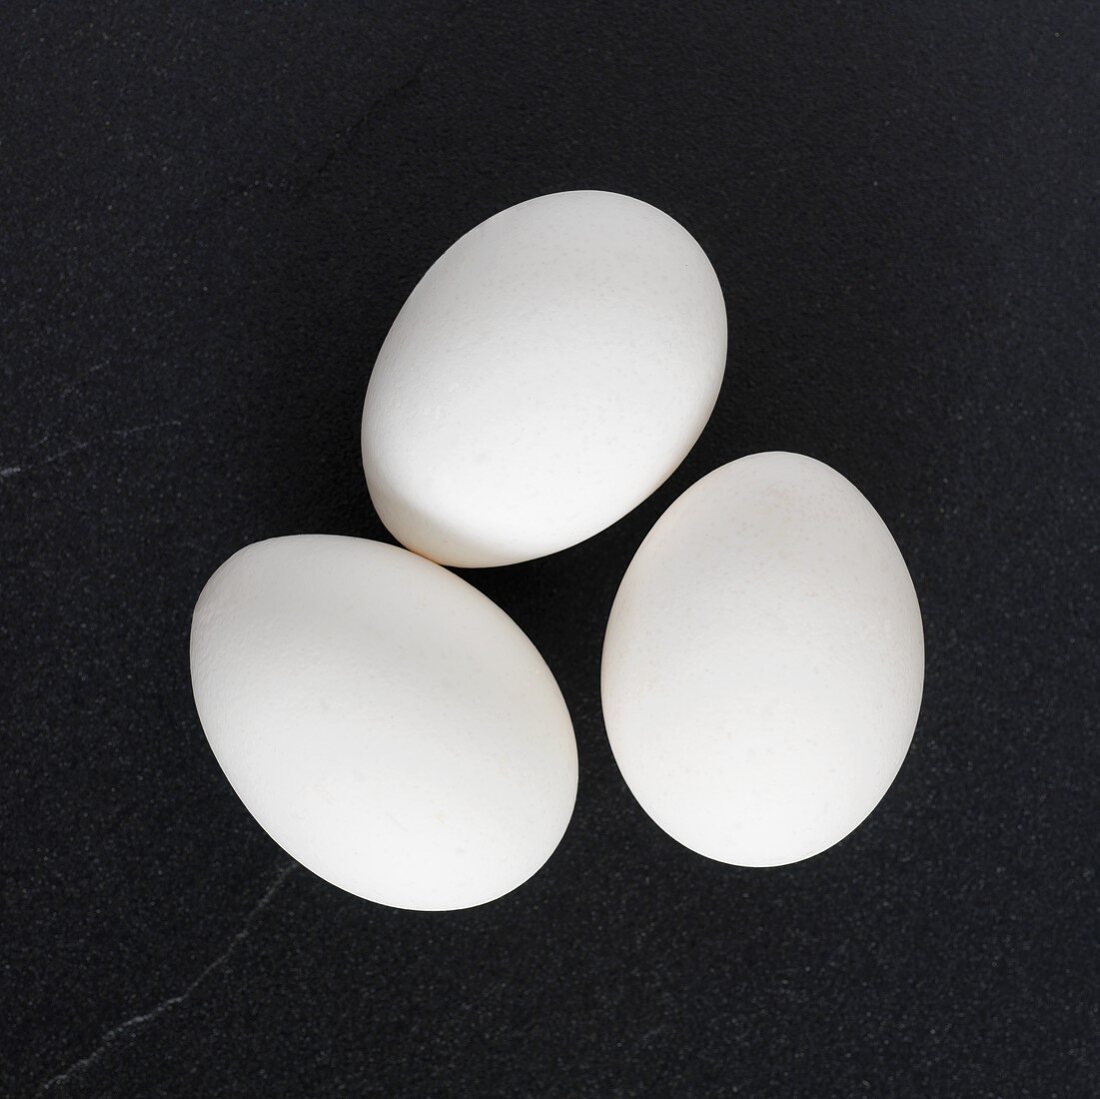 Three white eggs on black background